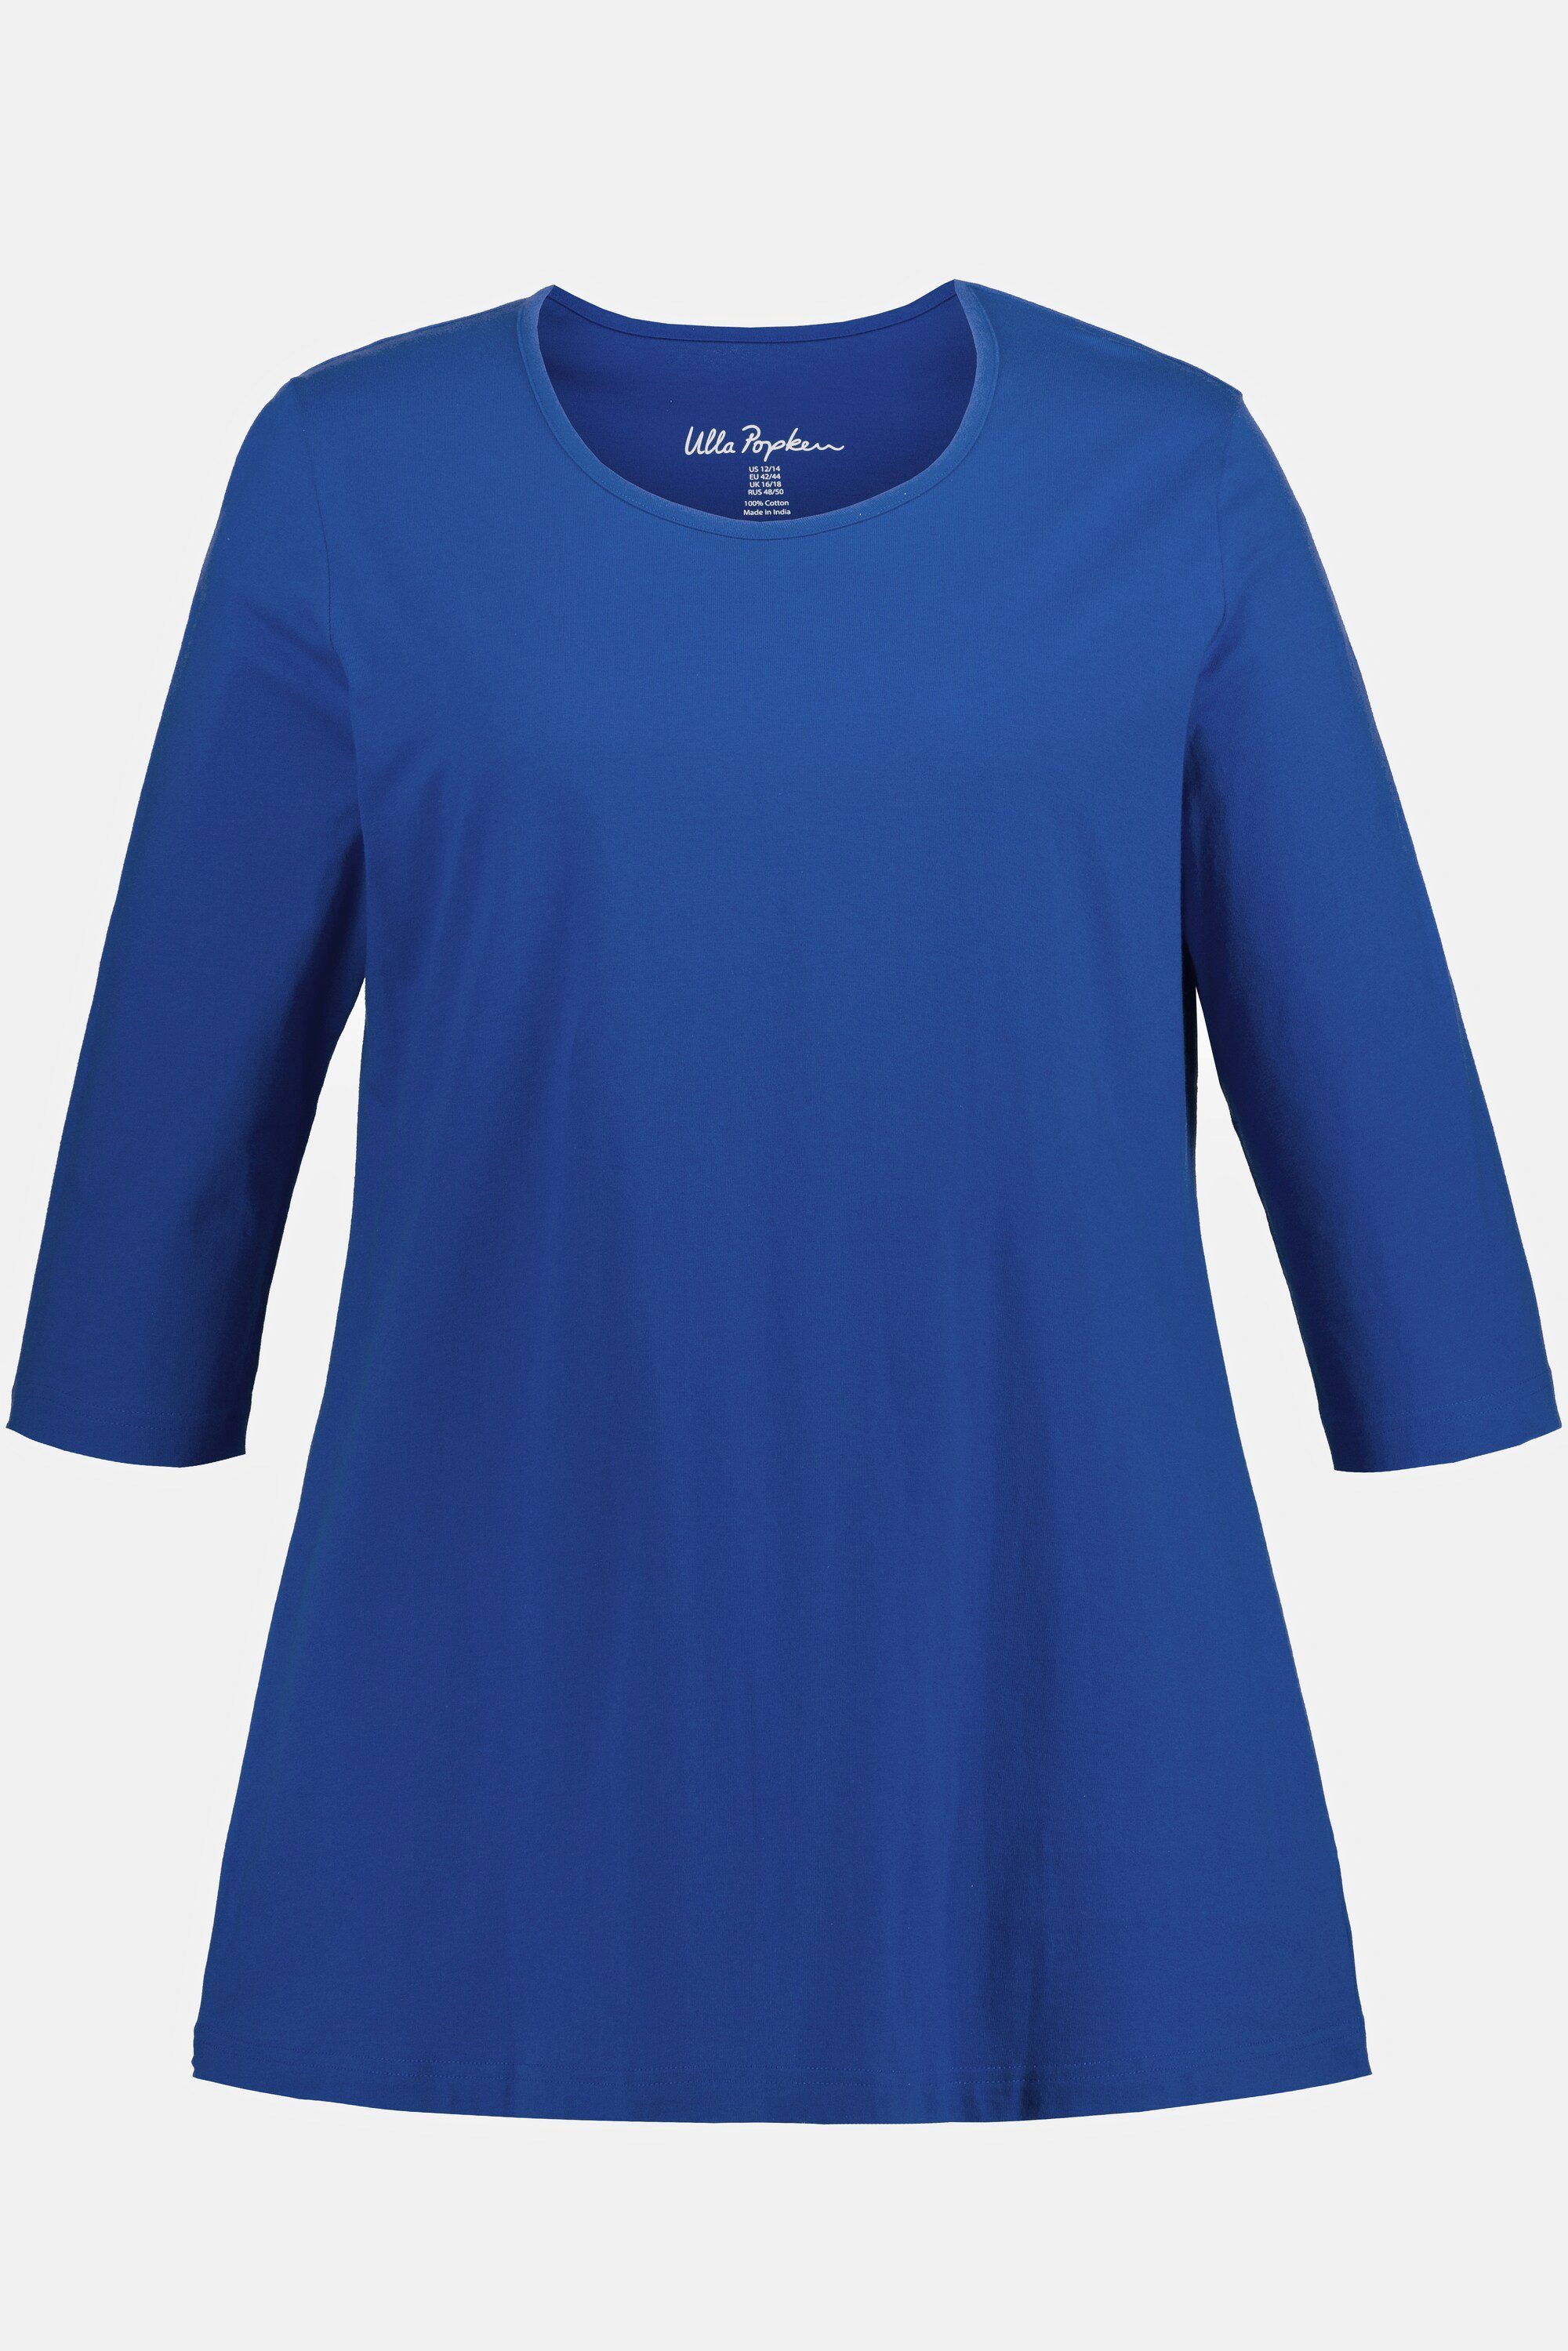 Popken Ulla 3/4-Arm A-Linie Longshirt Longshirt tintenblau Rundhals